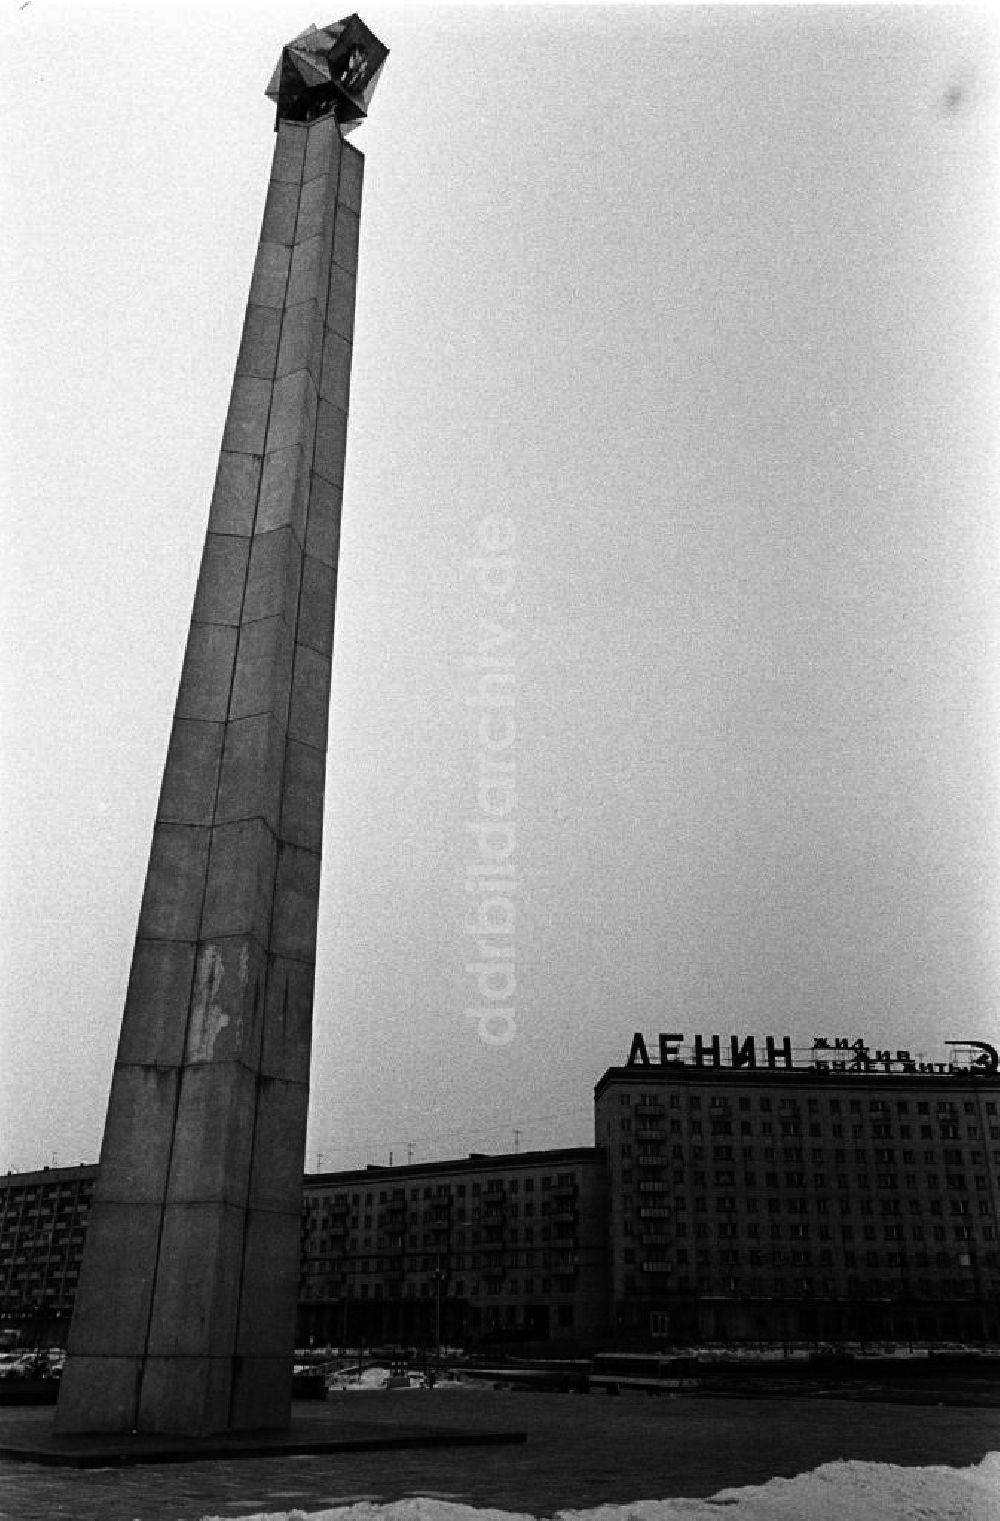 DDR-Bildarchiv: Uljanowsk - Denkmal / Obelisk des Ewigen Ruhmes in Uljanowsk